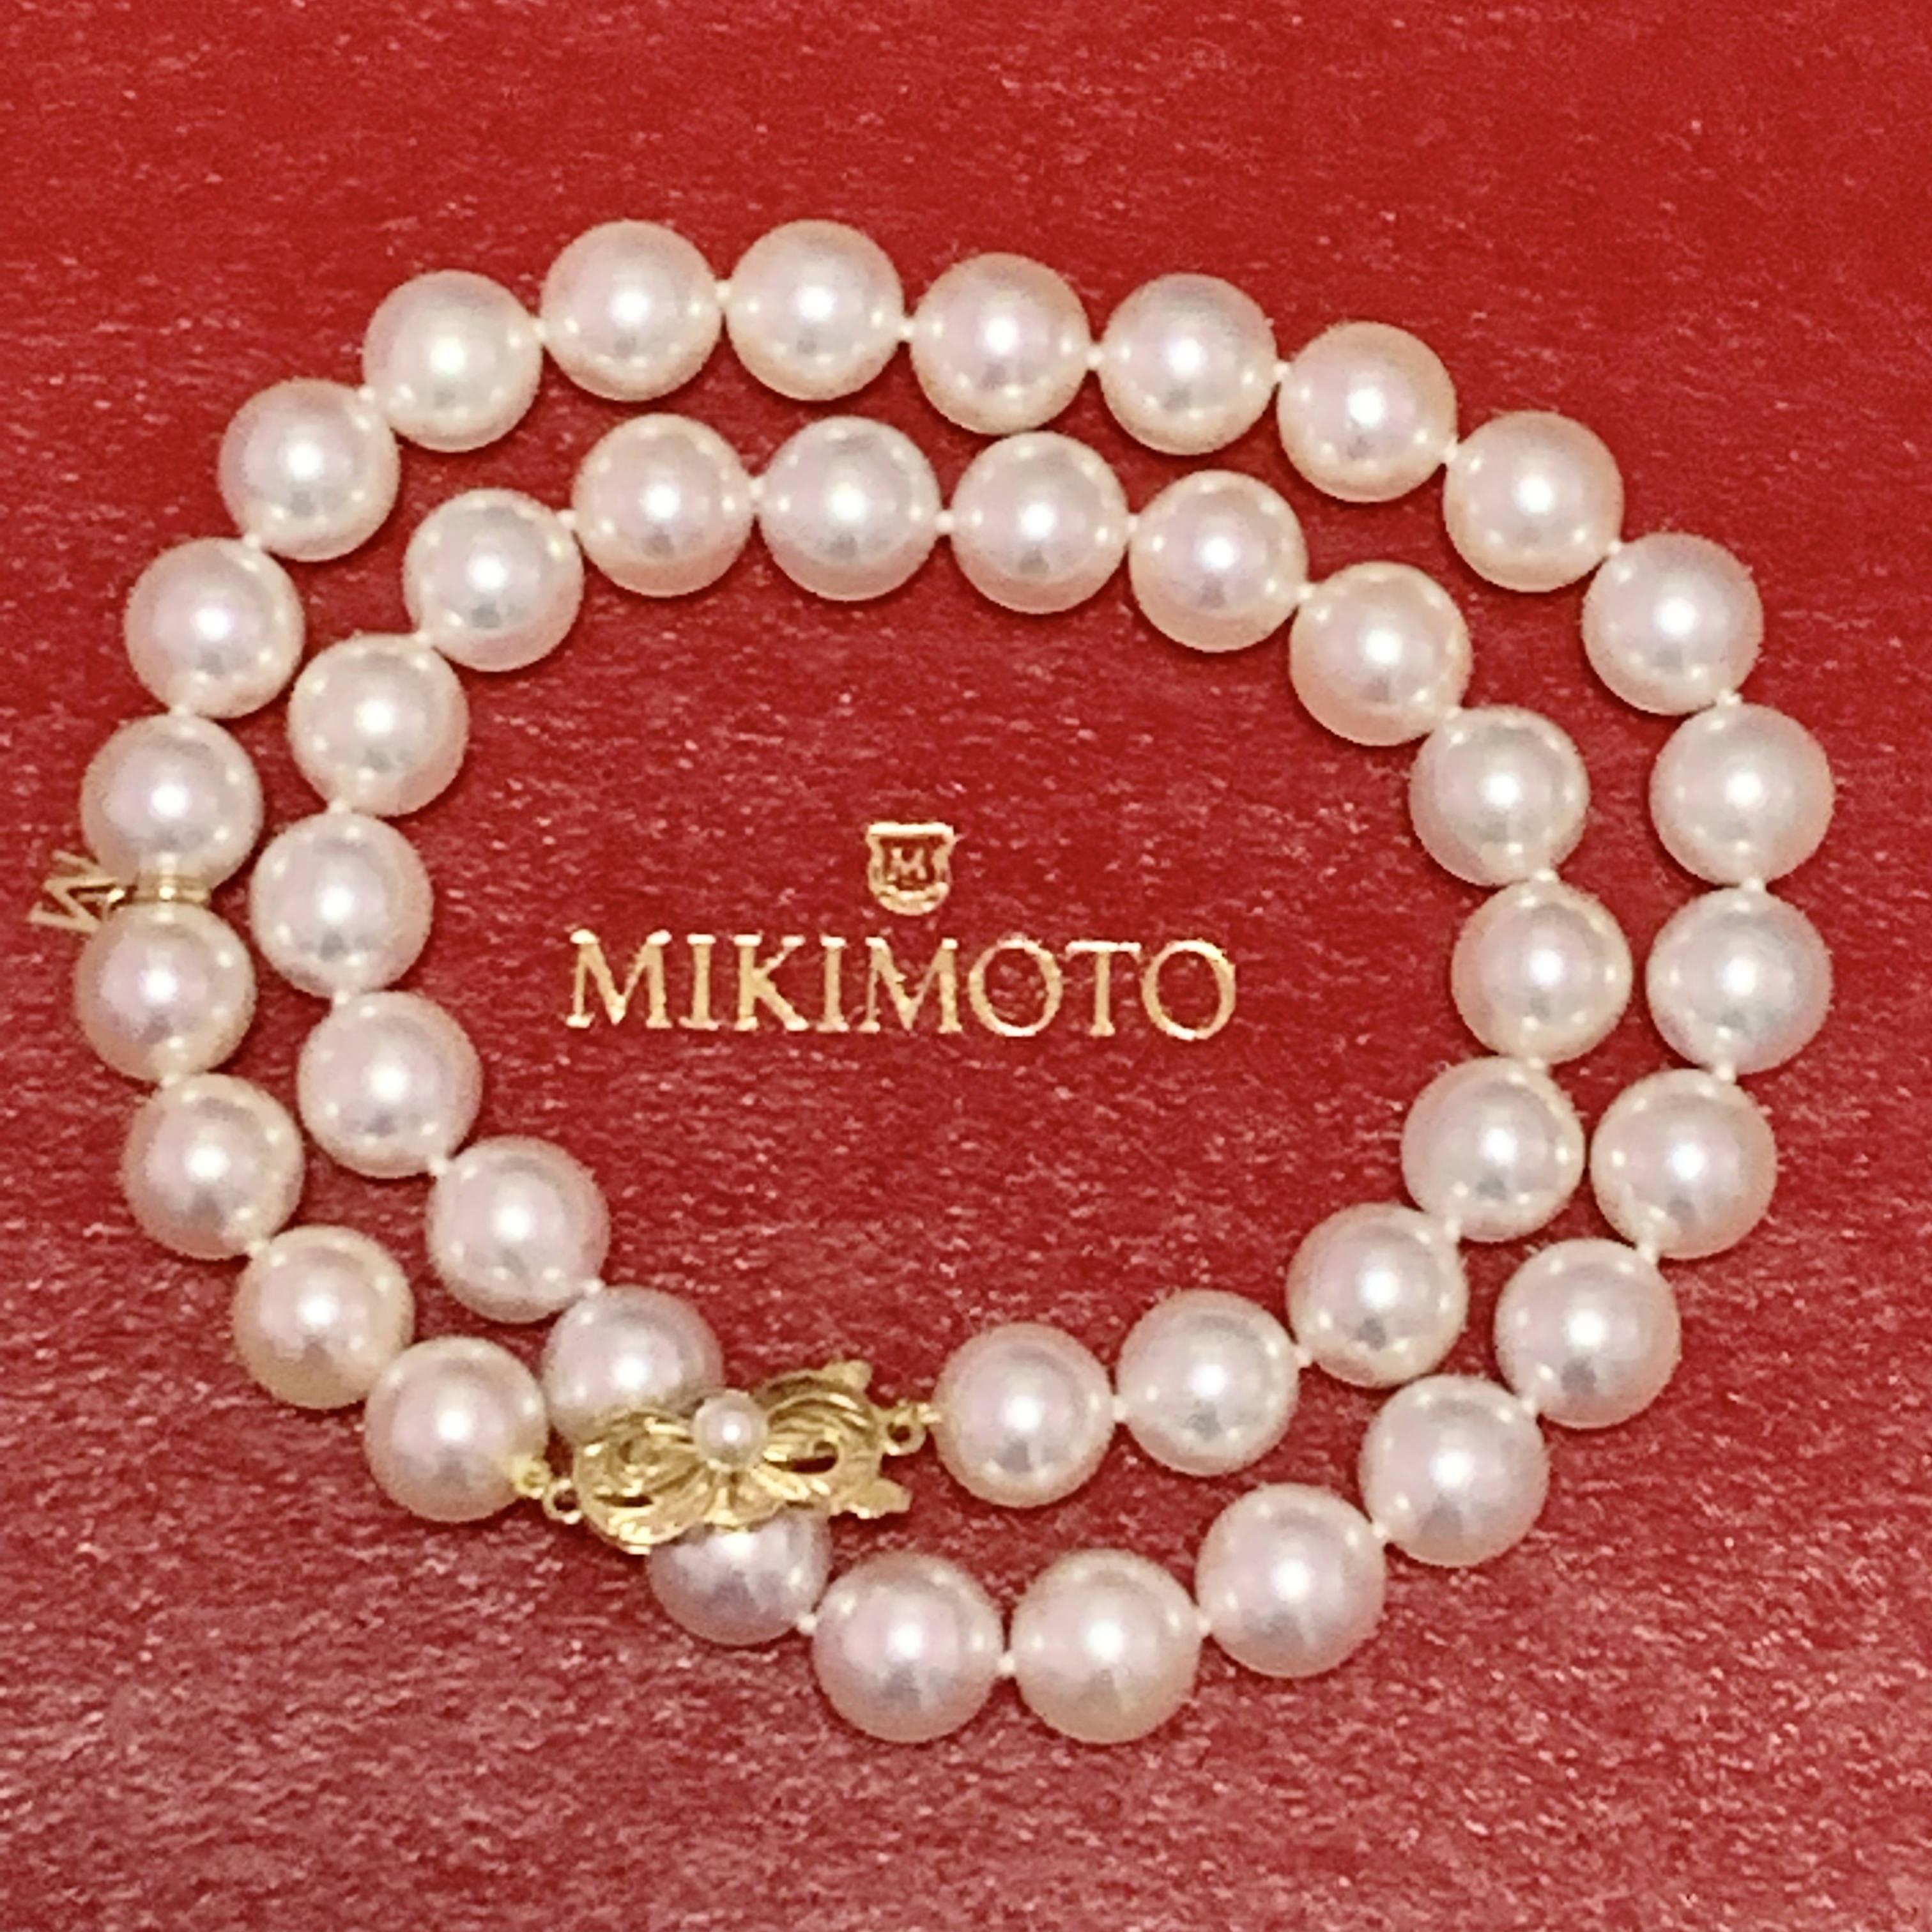 Mikimoto Estate Akoya Pearl Necklace 18k Gold Certified 5